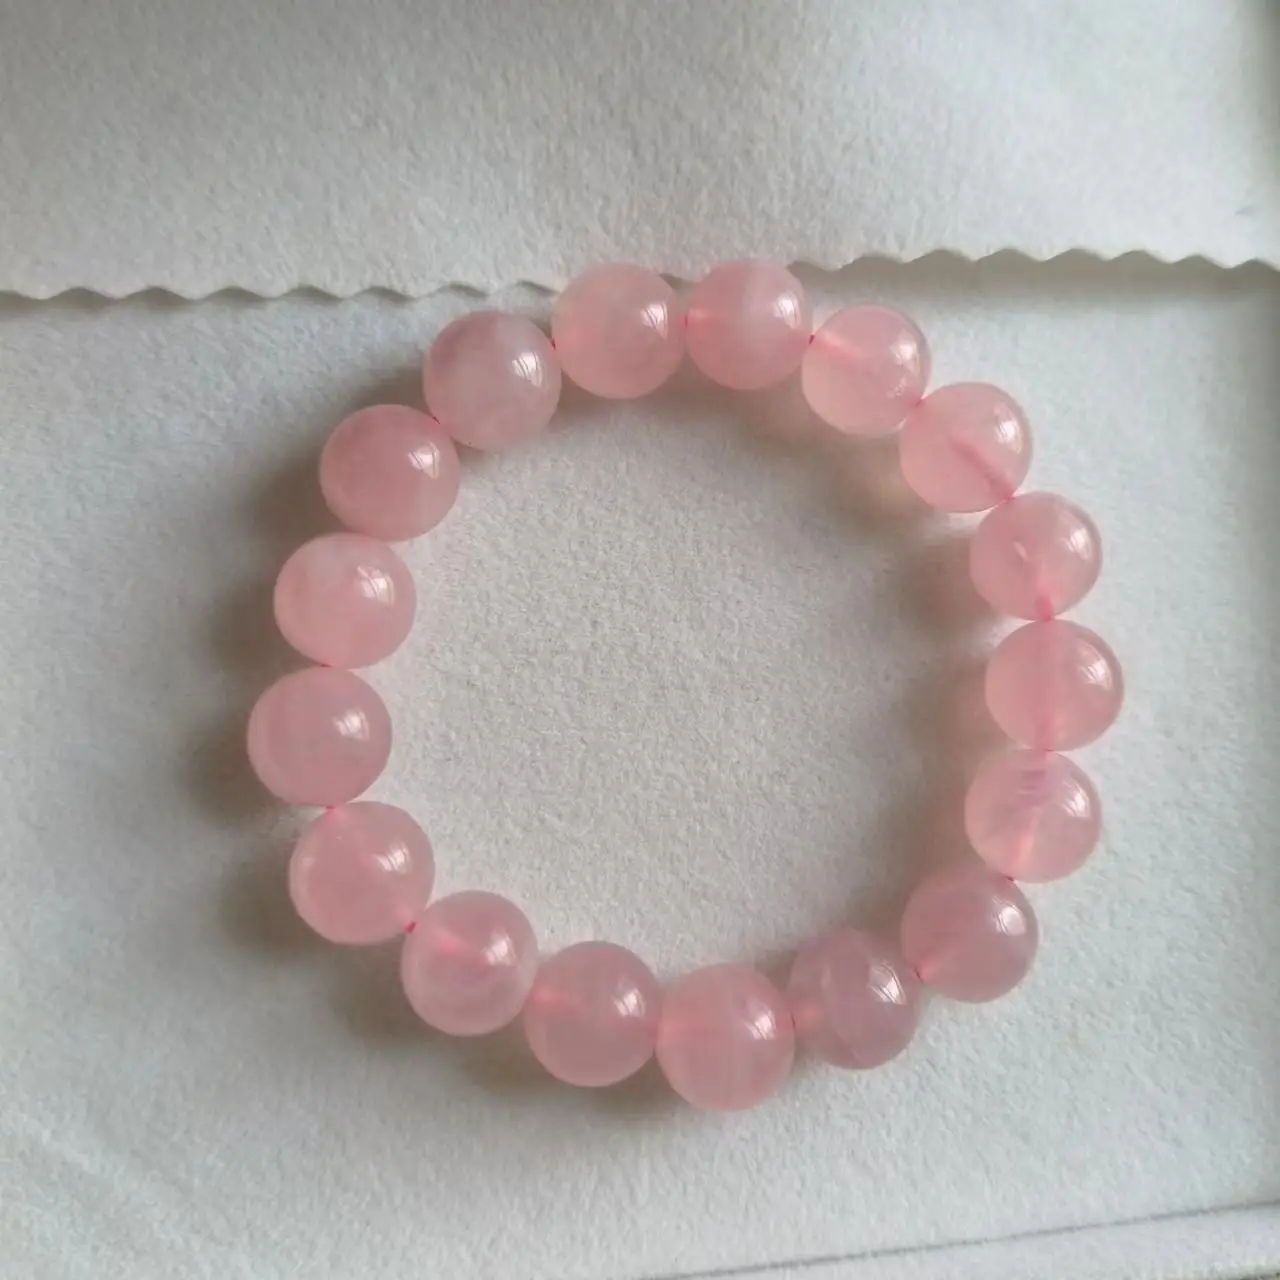 1pcs/lot Natural Pink Crystal Bracelet single circle bead antique accessories Gift Ladies Jewelry accessories gem jewelry amulet